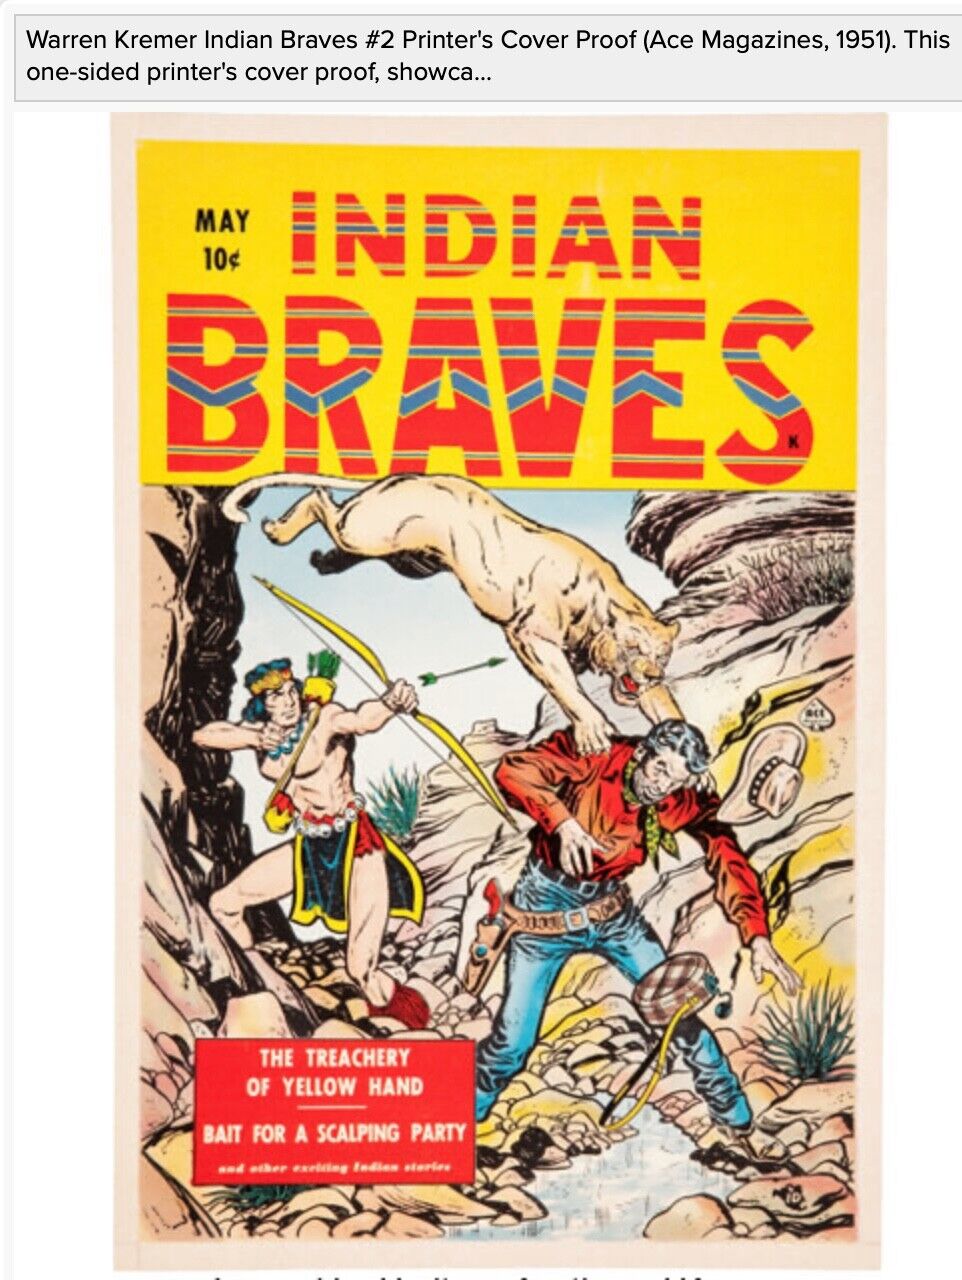 Warren Kremer Indian Braves #2 Printer's Cover Proof Ace Magazines, 1951 $110